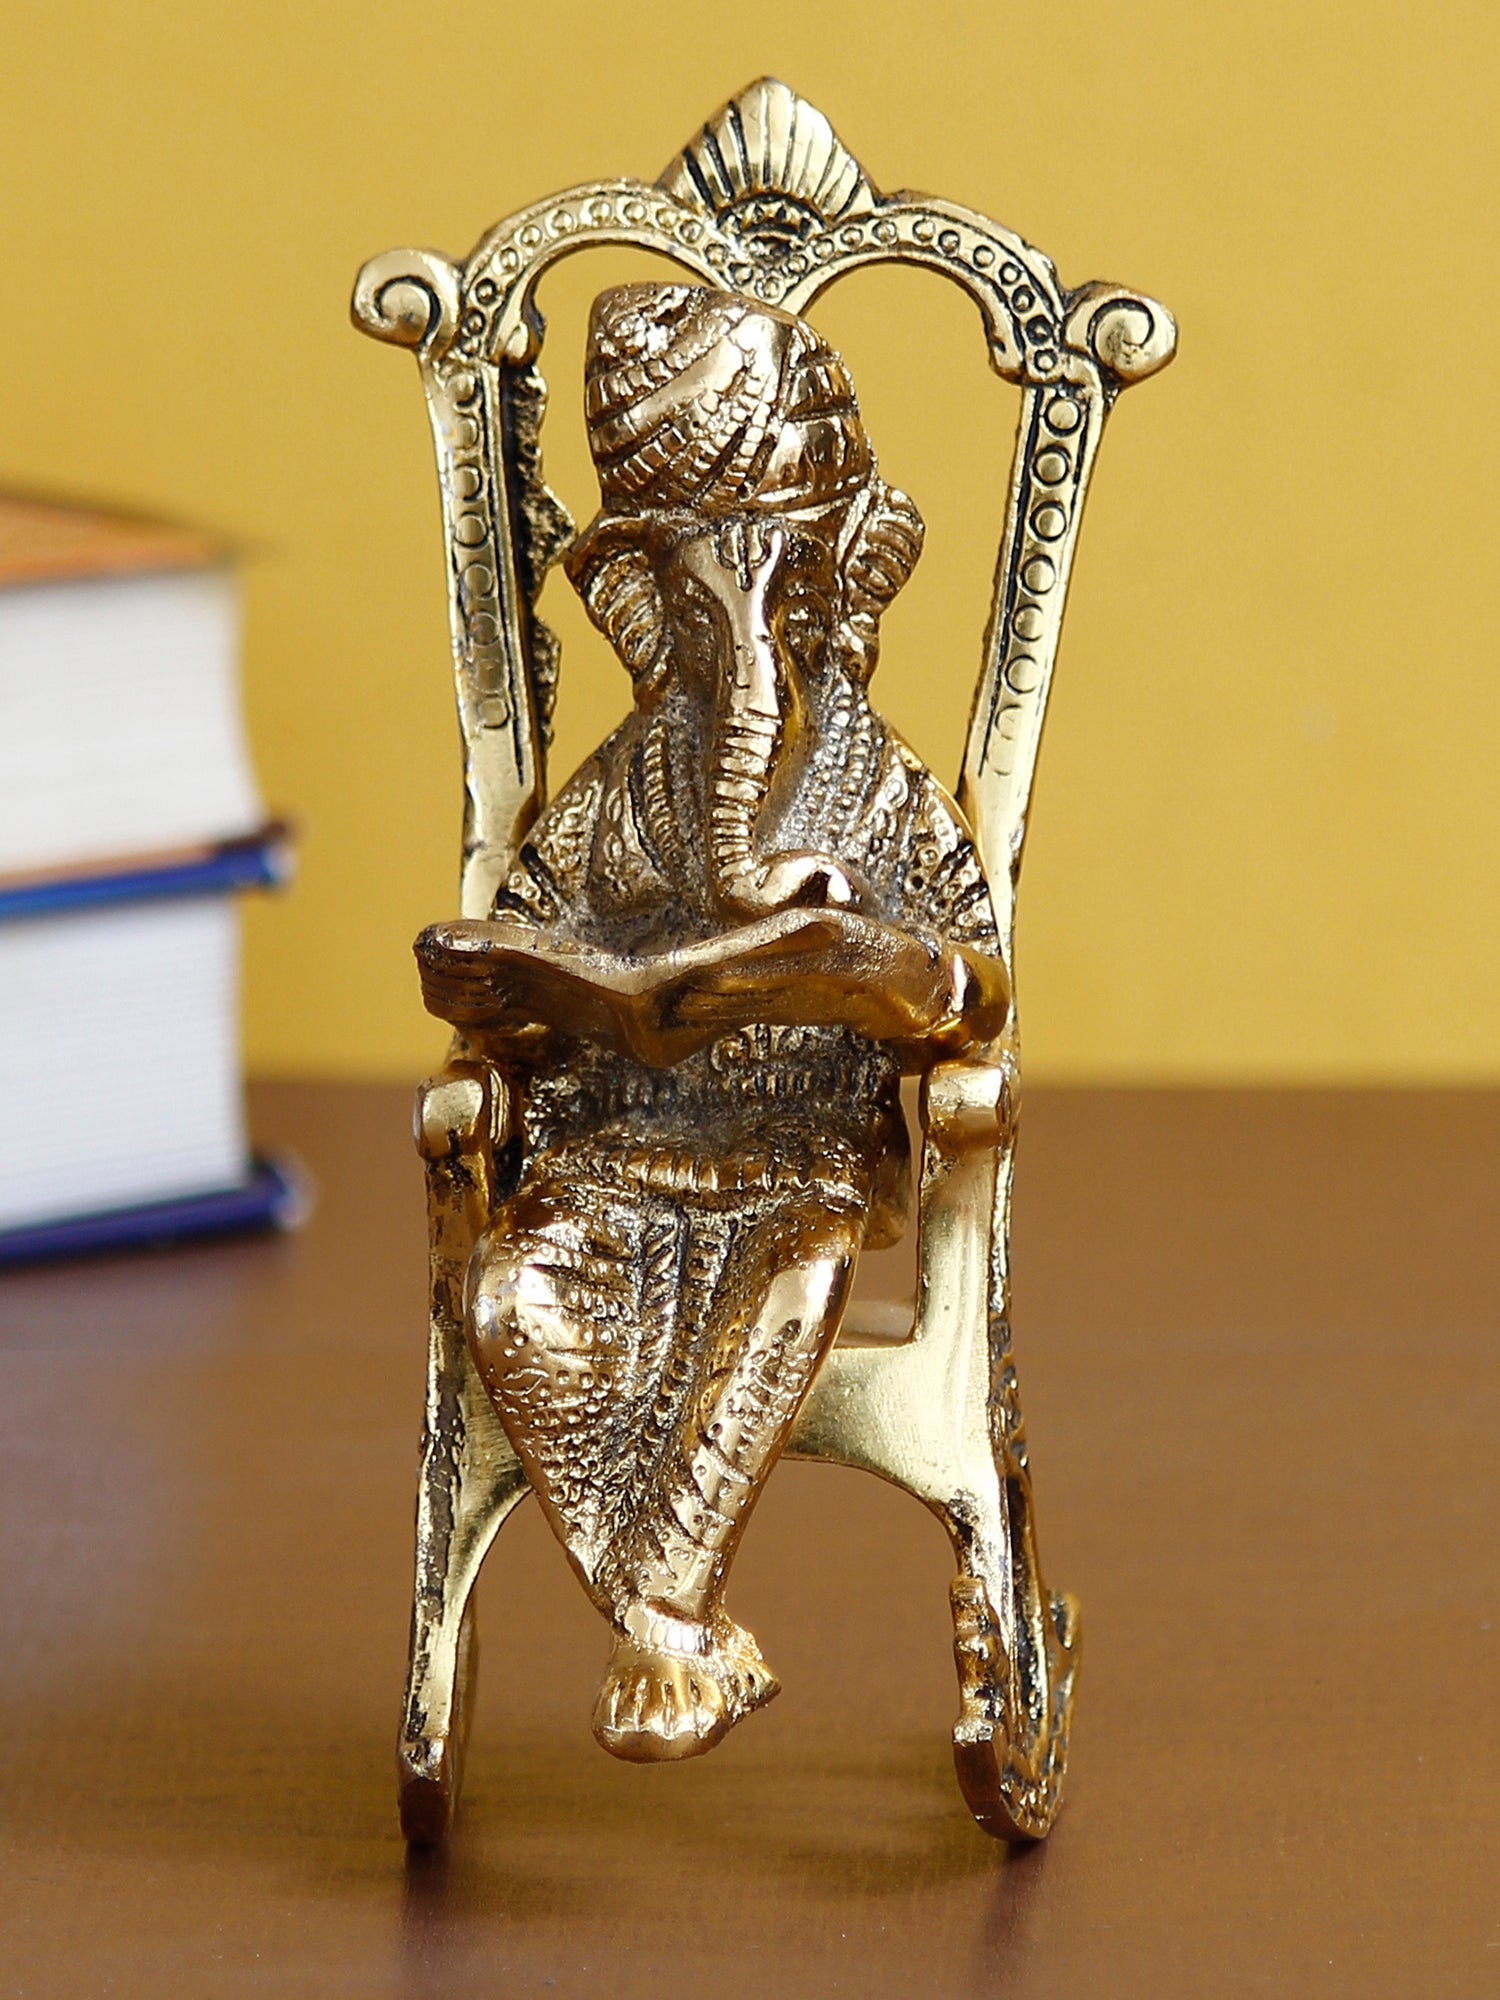 Golden Metal Lord Ganesha Idol Reading Book on Rocking Chair 1